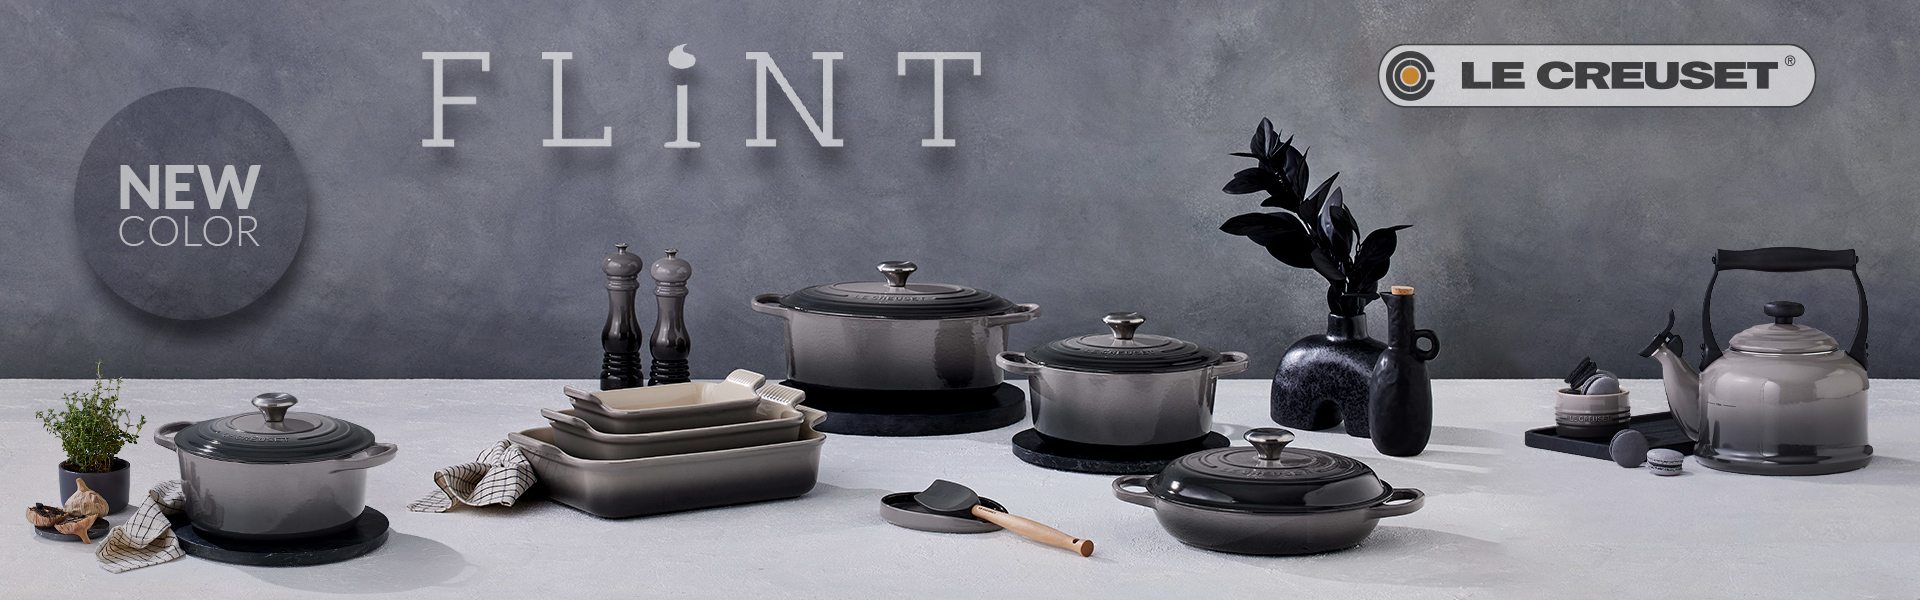 Le Creuset Has New Harry Potter' Kitchen Items